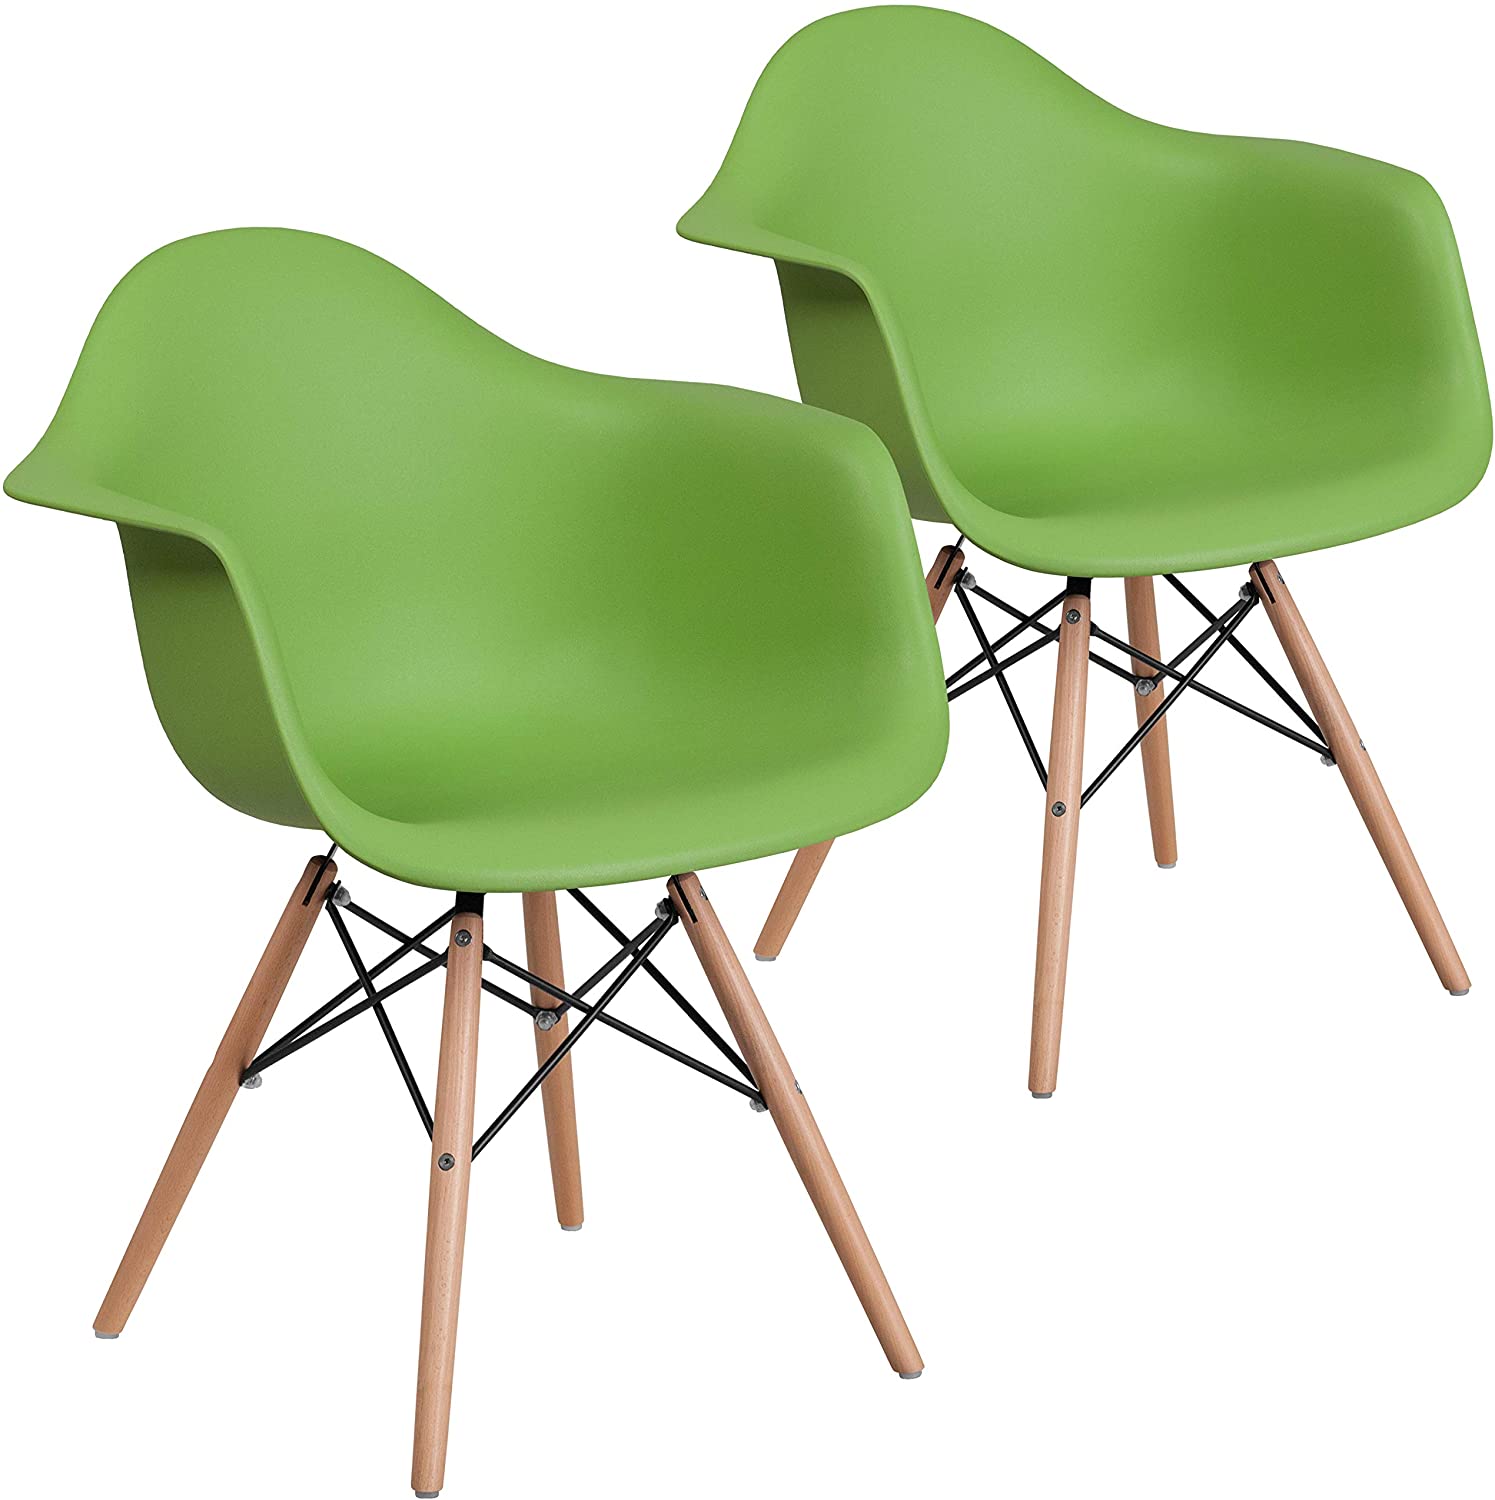 B07659DXZP Flash Furniture 2 Pk. Alonza Series Green Plastic Chair with Wooden Legs